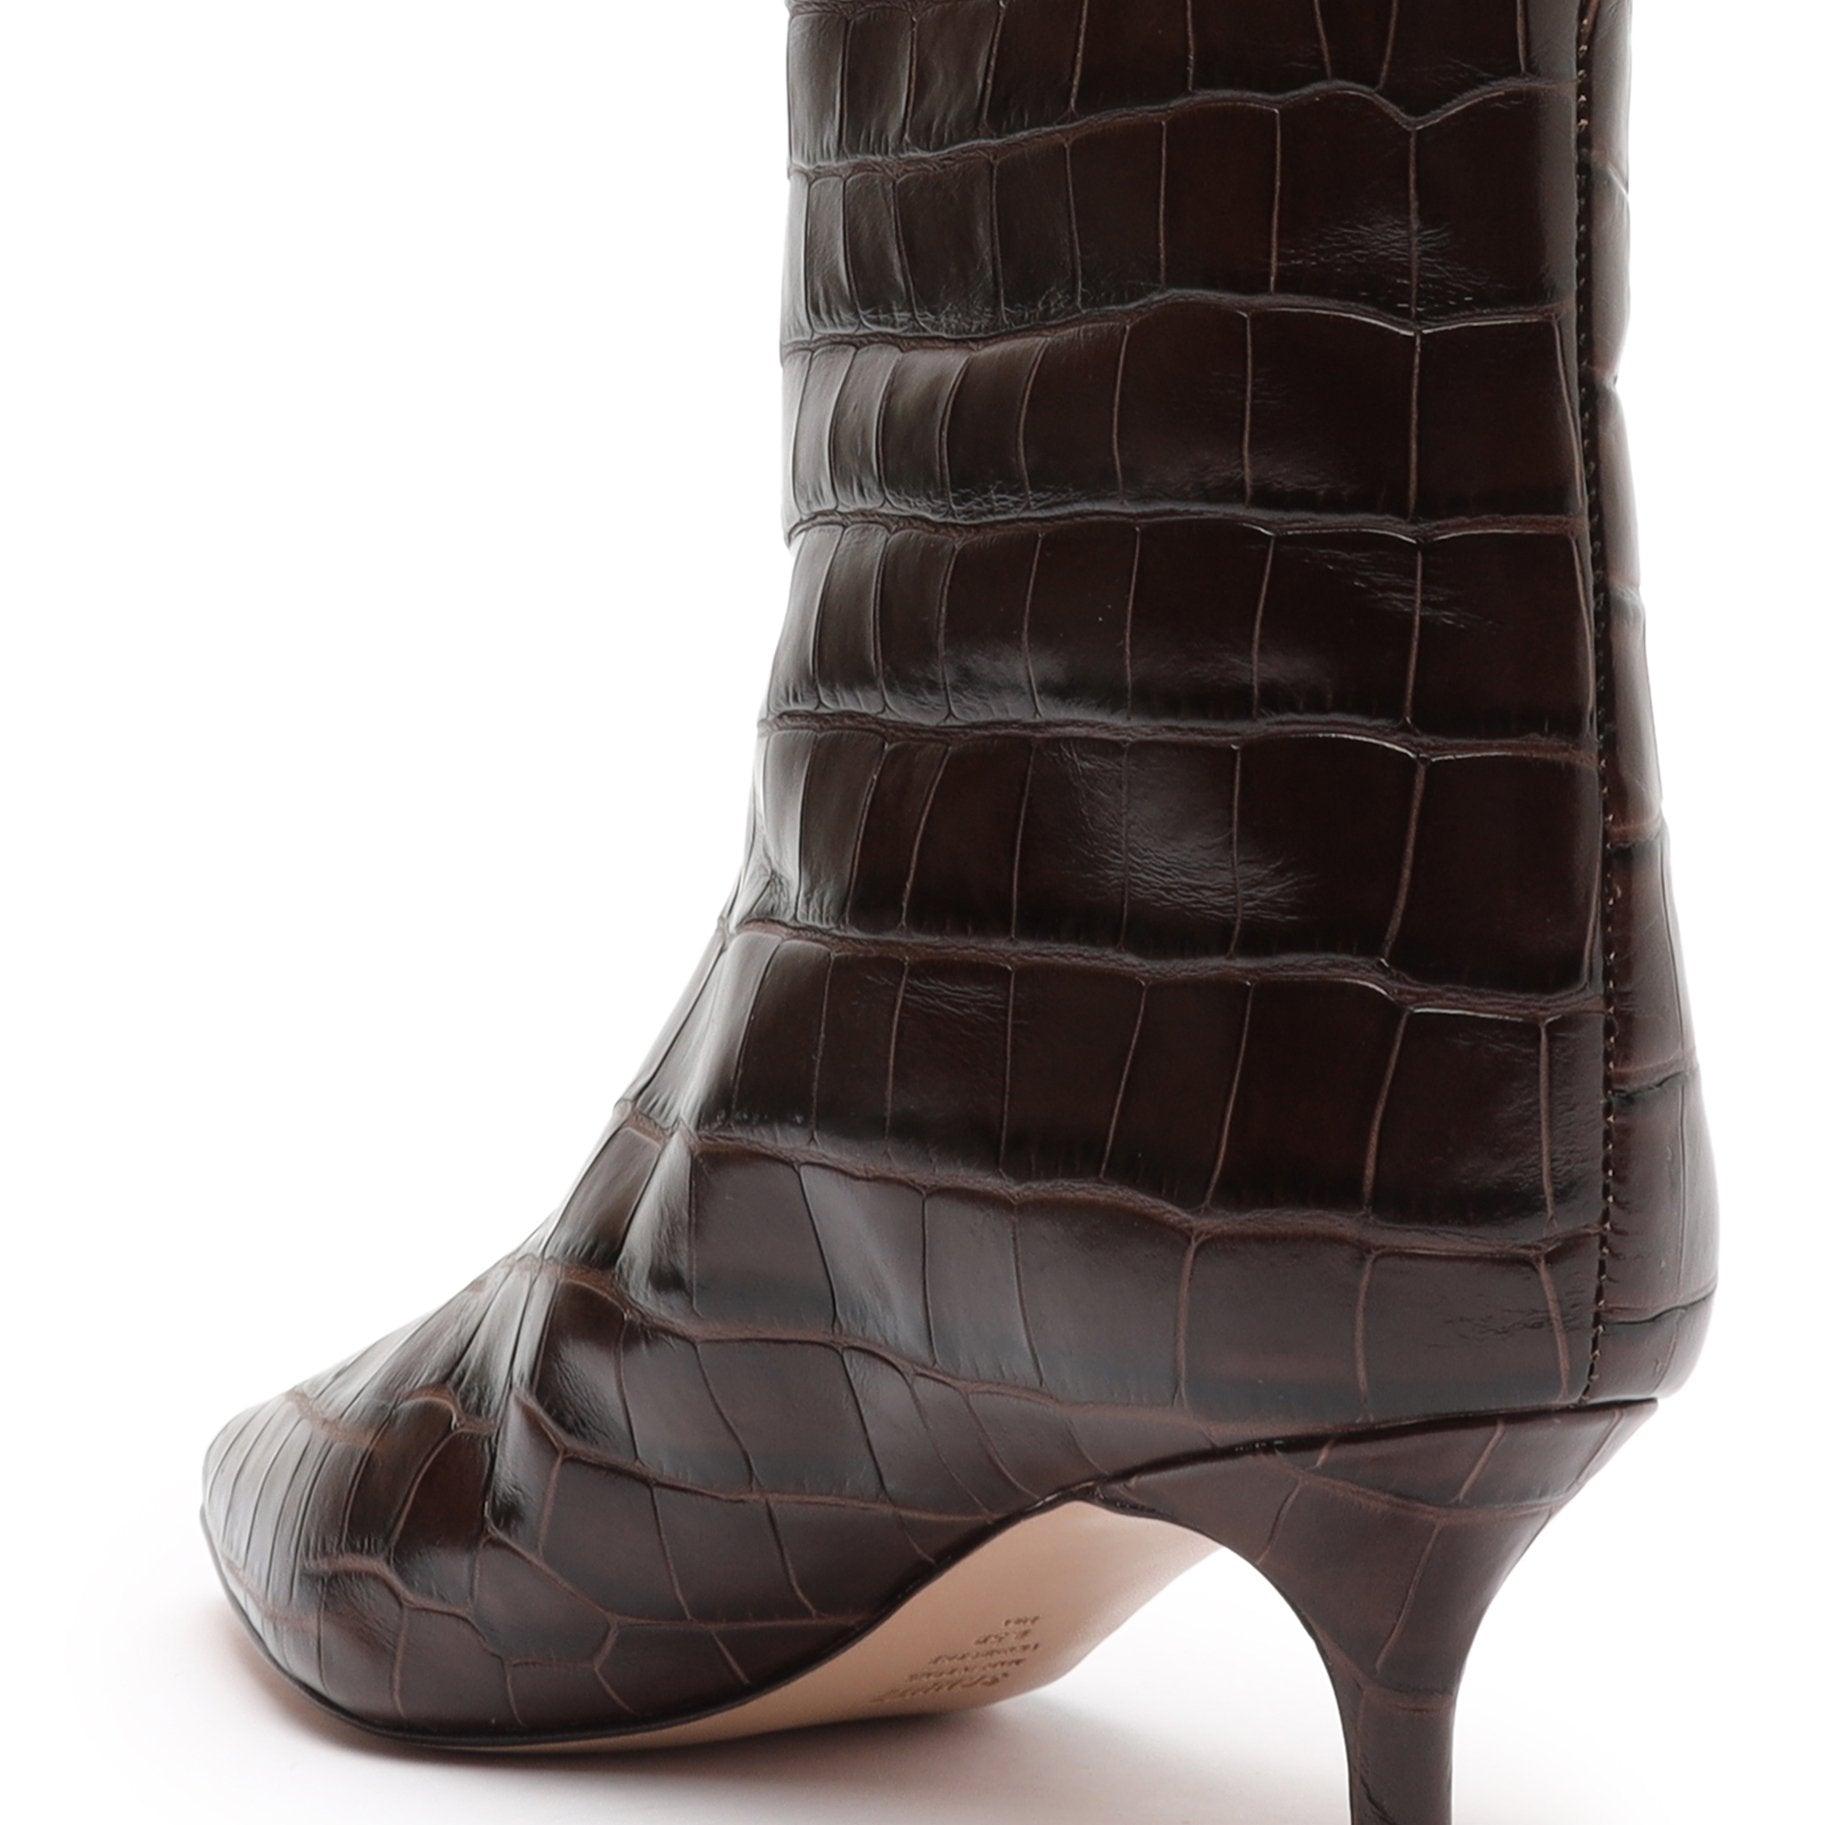 Schutz Maryana Black - Black Leather Boots - Croc-Embossed Boots